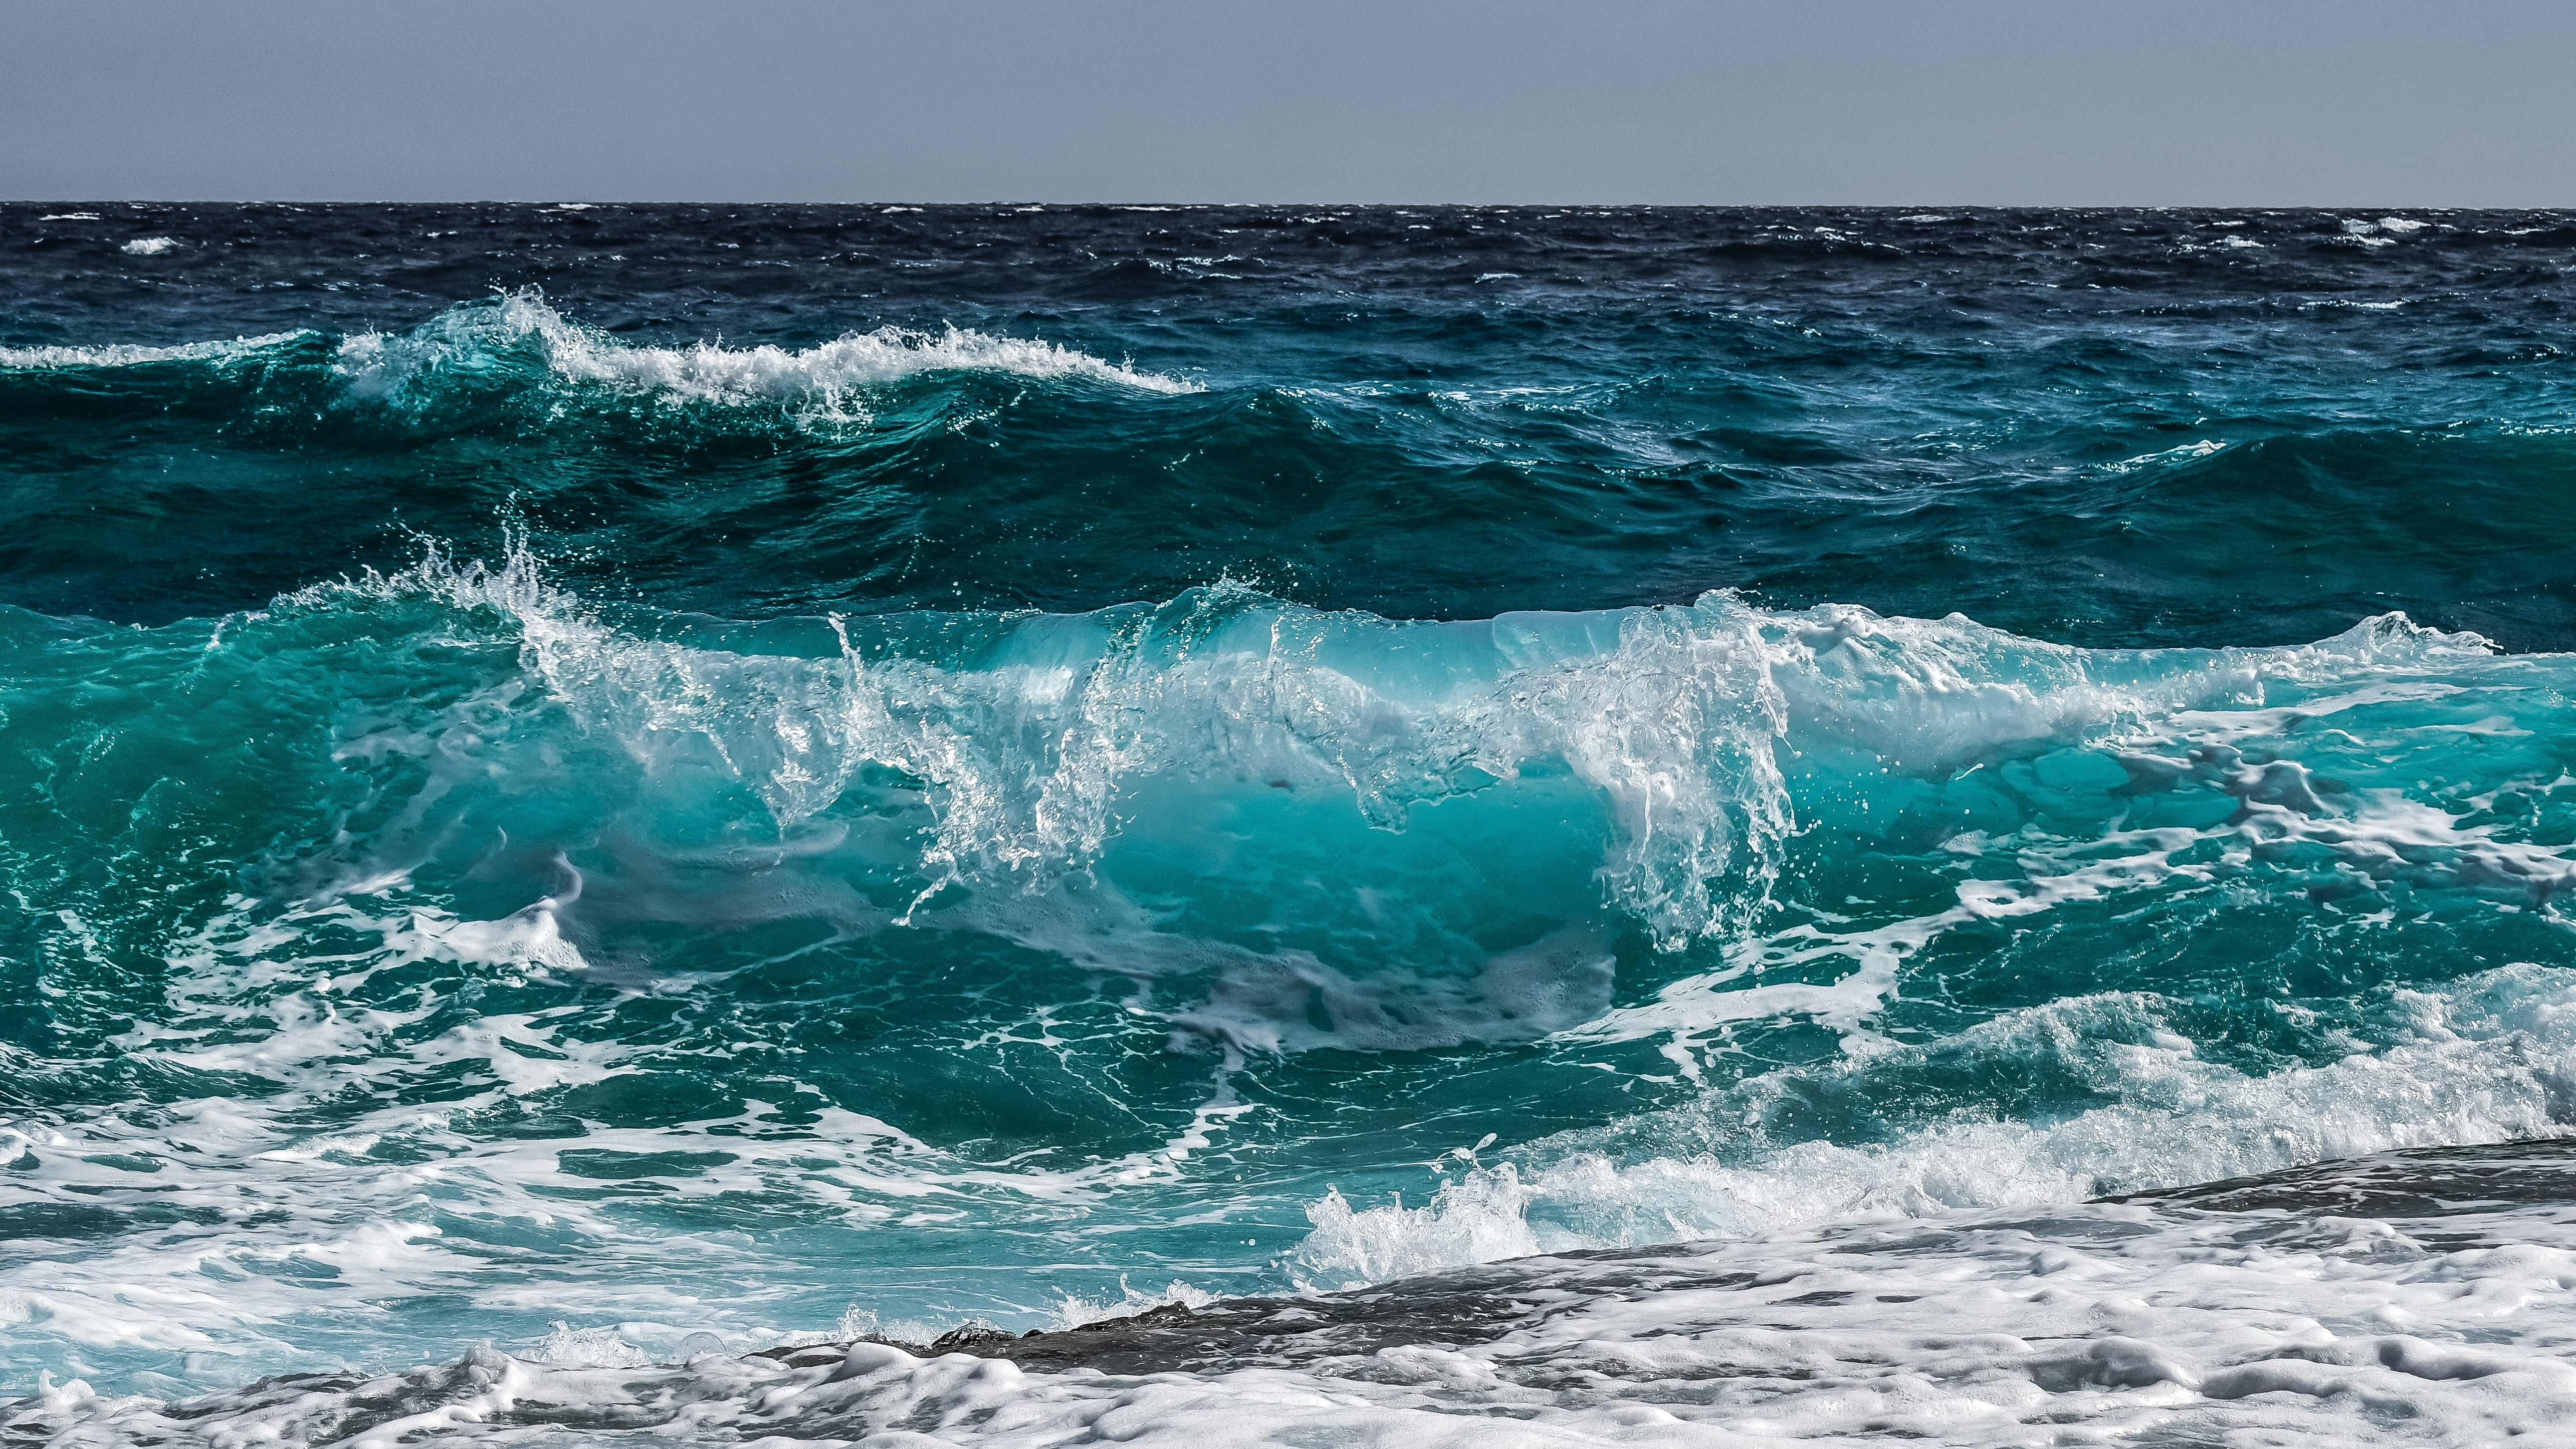 ocean waves at daytime, water, surf, sea, spray, wind, motion